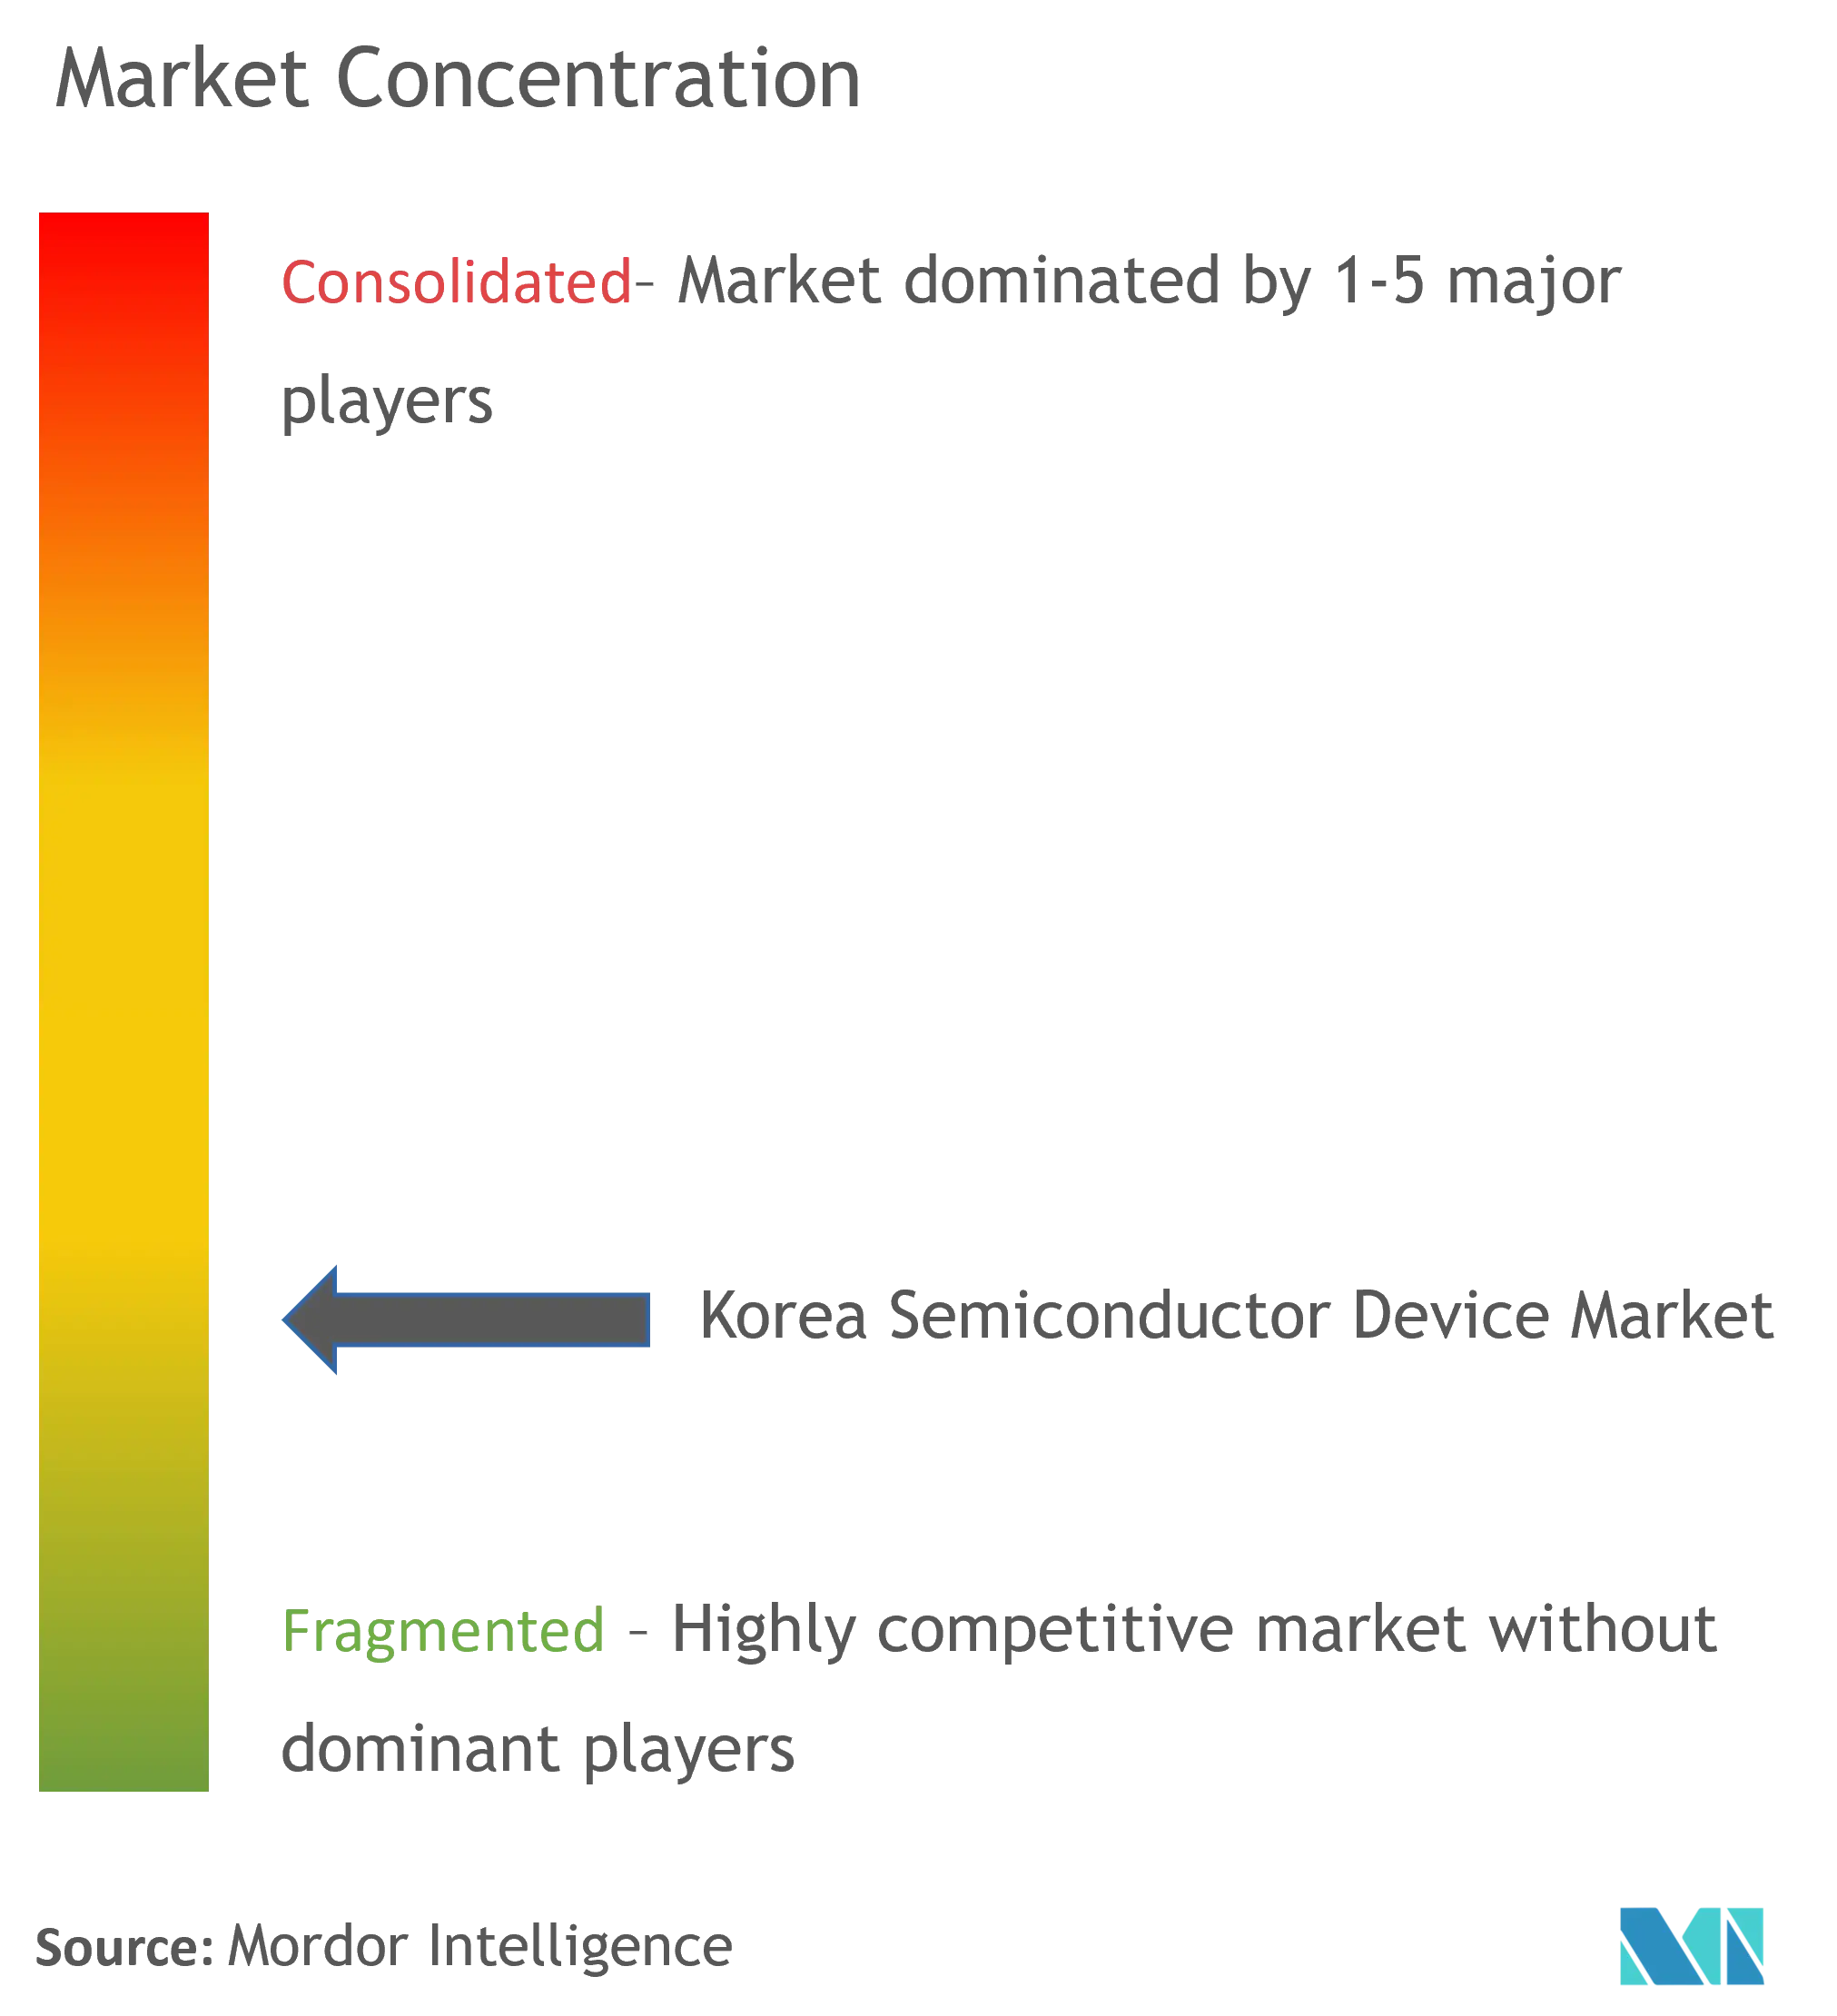 Korea Semiconductor Device Market Concentration